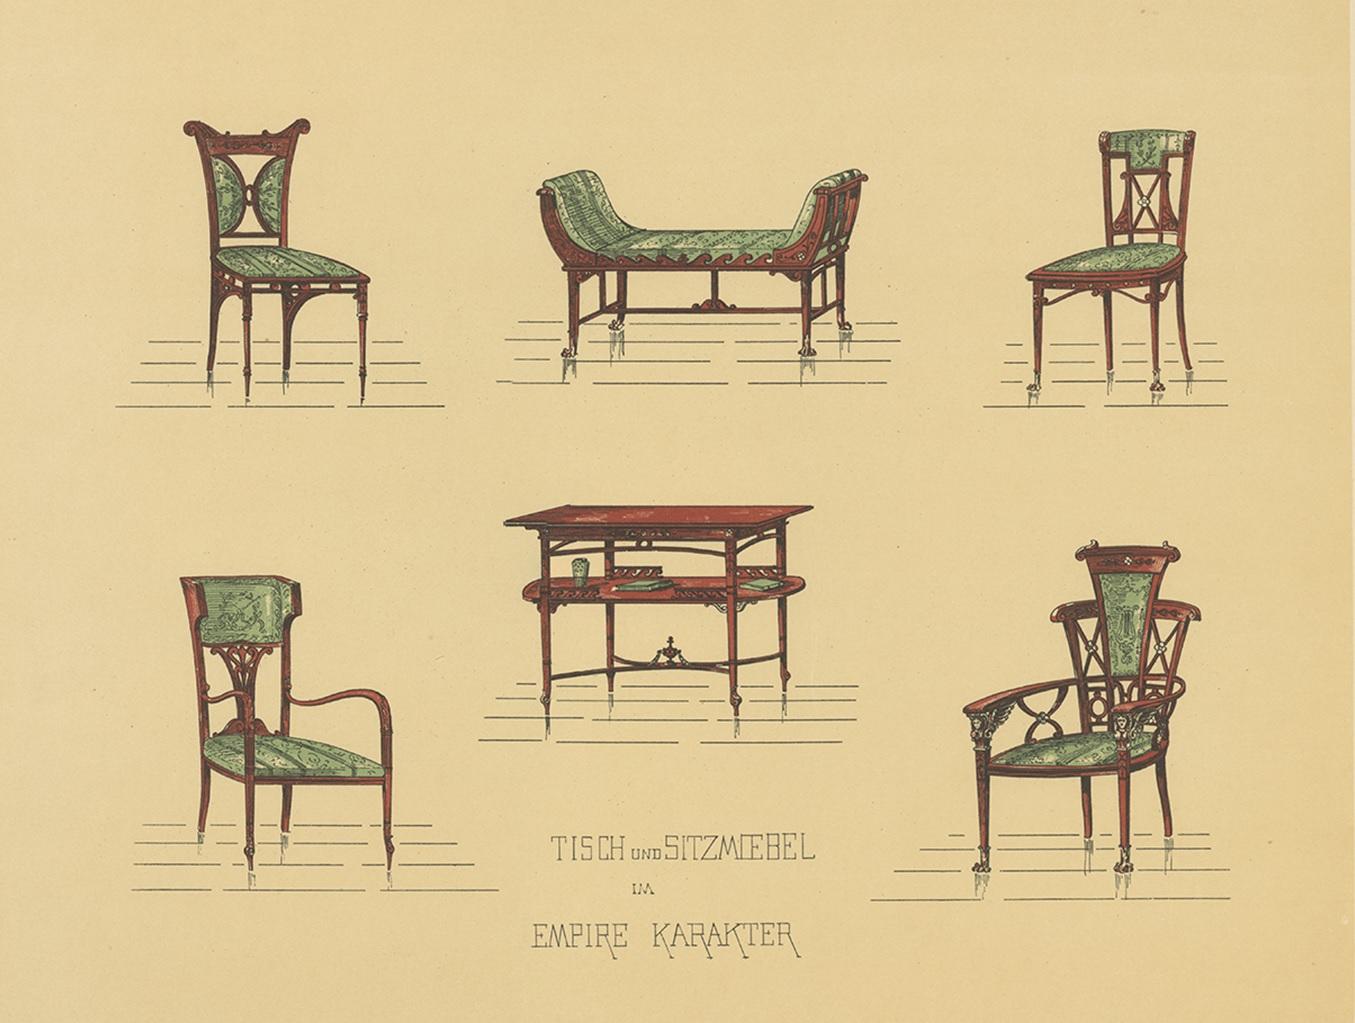 Antique print titled 'Tisch und Sitzmoebel im Empire Karakter'. Lithograph of tables and chairs. This print originates from 'Det Moderna Hemmet' by Johannes Kramer. Published by Ferdinand Hey'l, circa 1910.